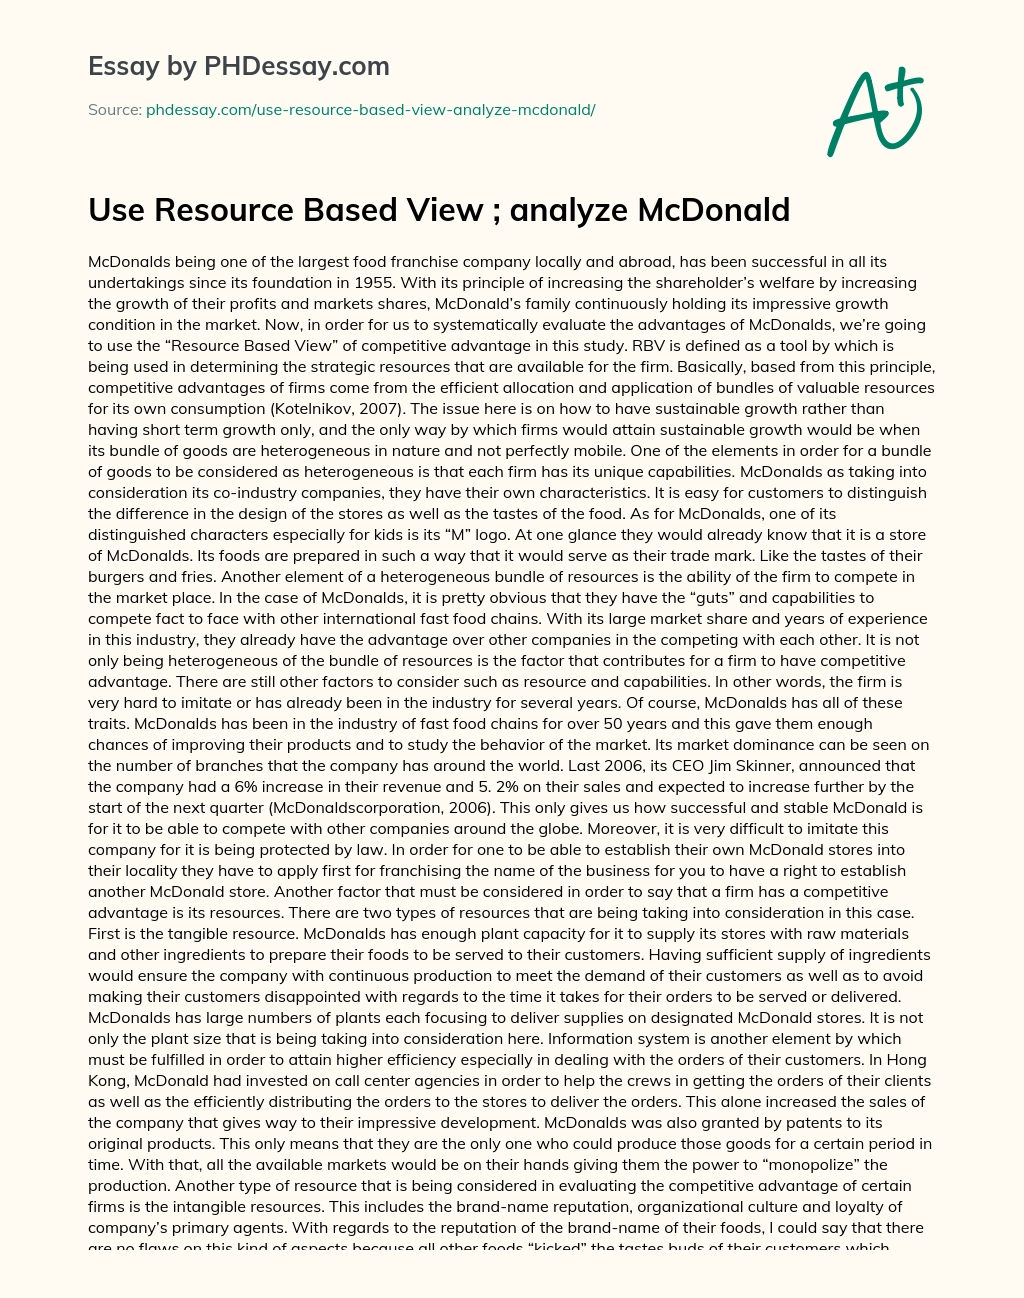 Use Resource Based View ; analyze McDonald essay